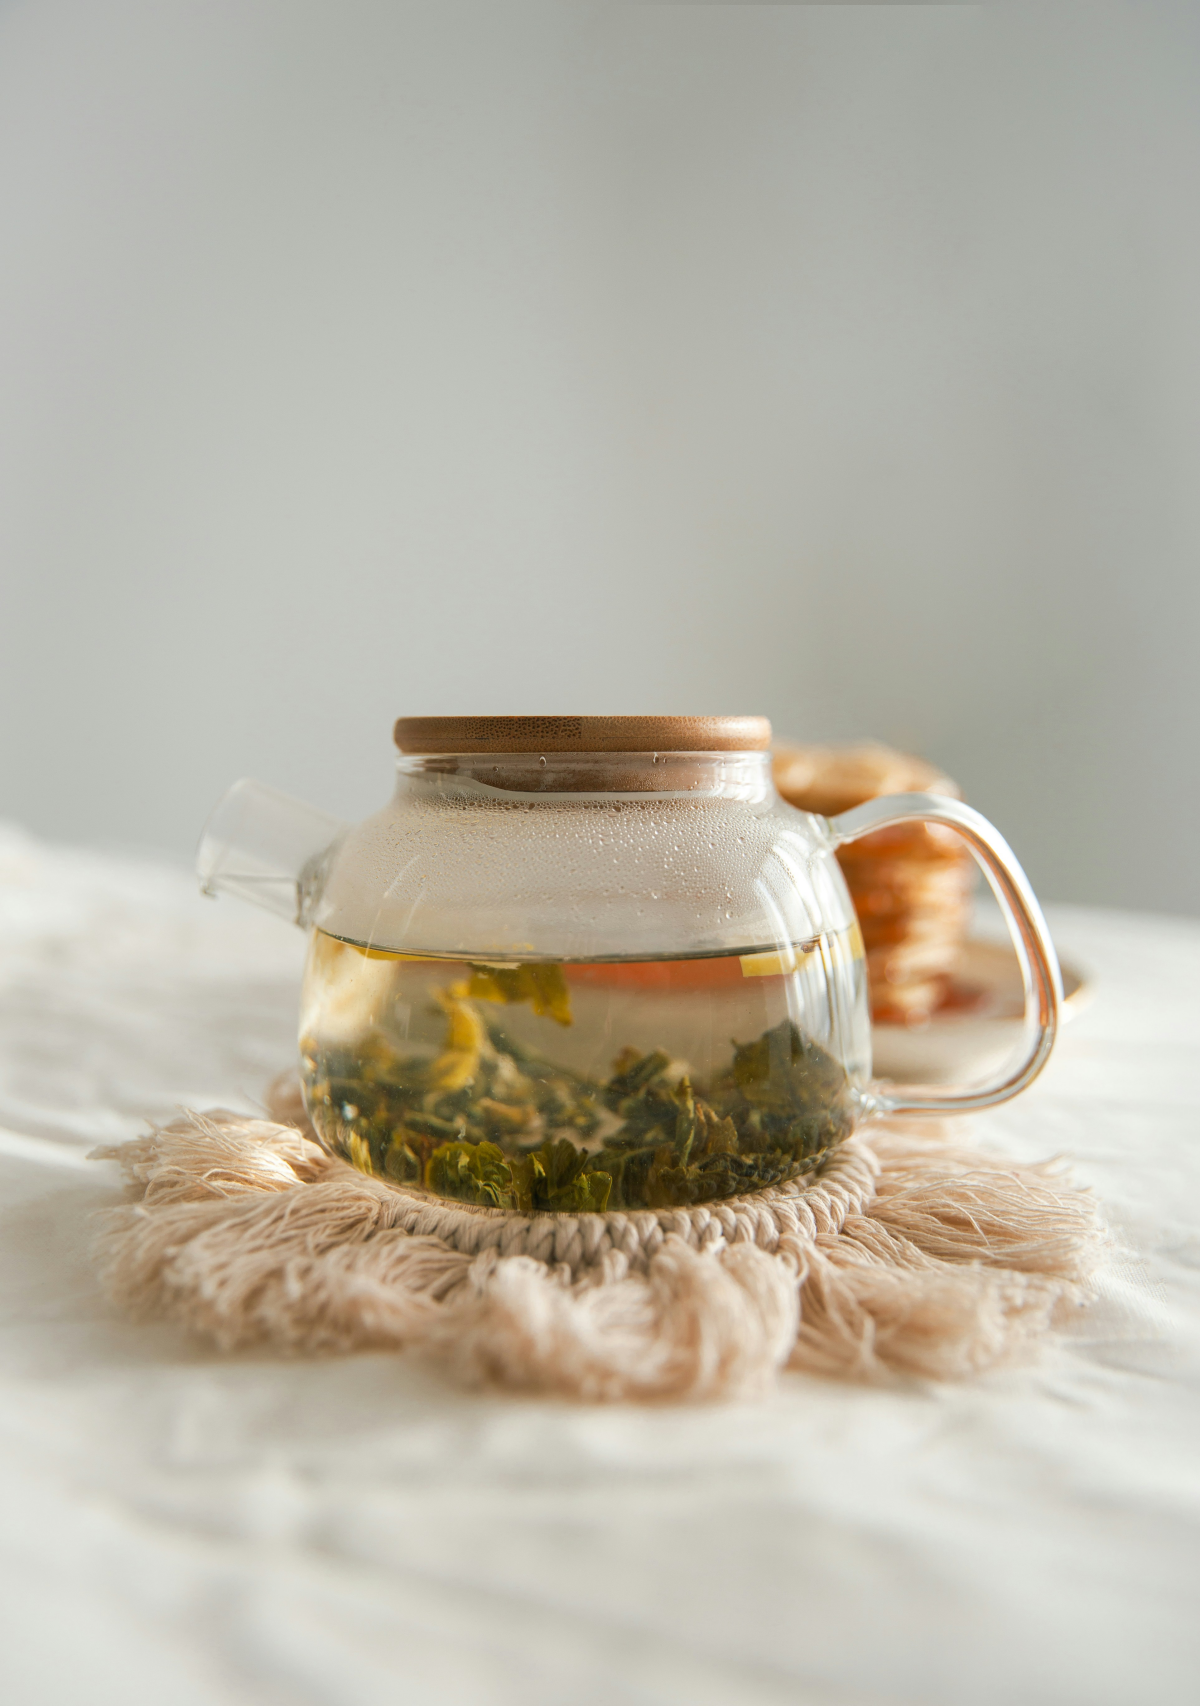 tick spray for yard herbal tea in pot